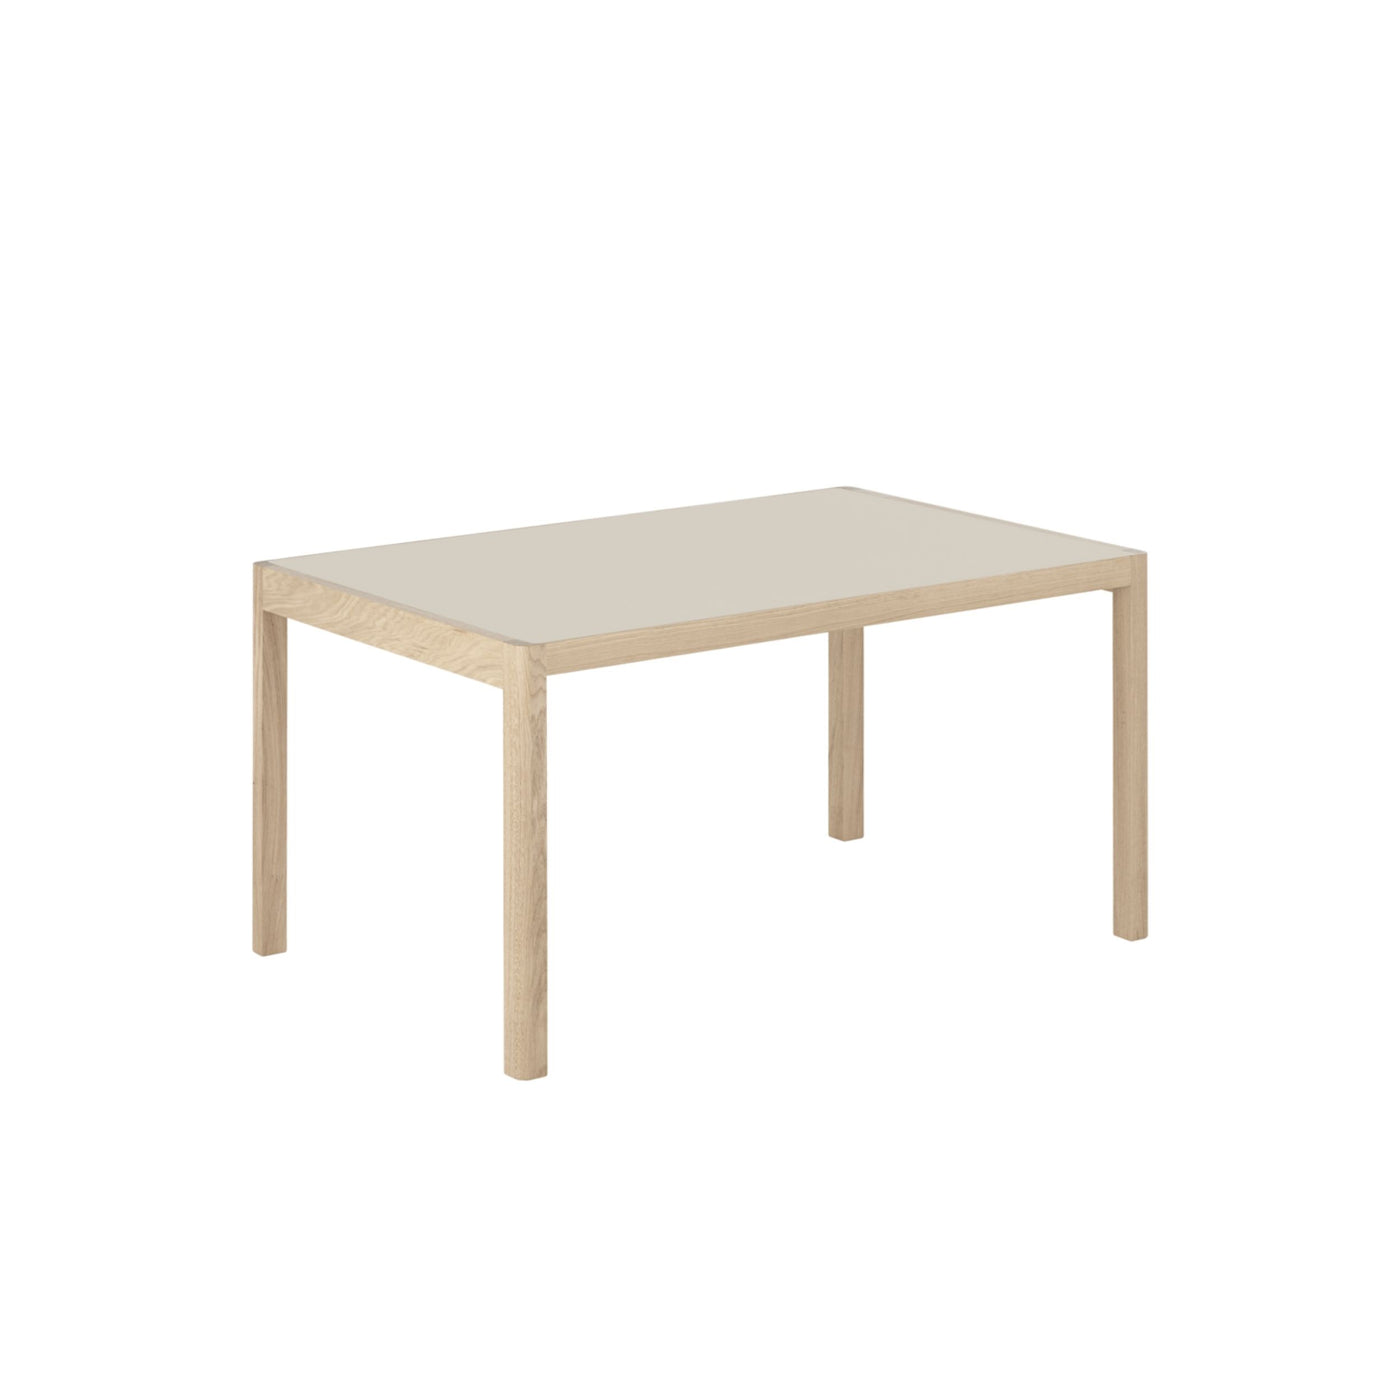 Muuto Workshop Table in warm grey lino/oak. Shop online at someday designs. #size_92x140